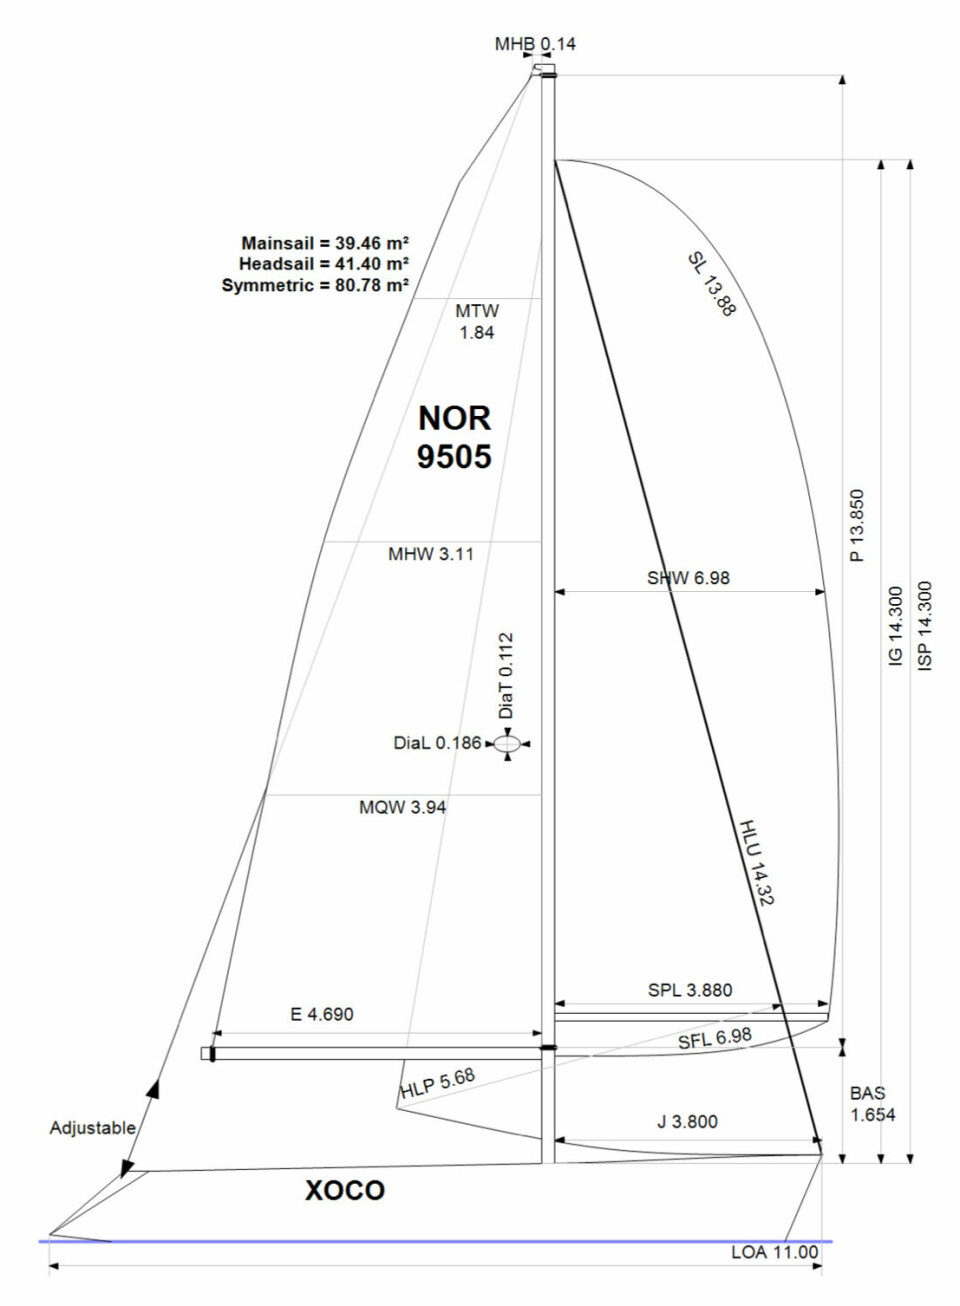 NOR-rating: X-362 Sport Xoco er 11 meter lang, forstaget er også satt helt i baugen, som er feil.